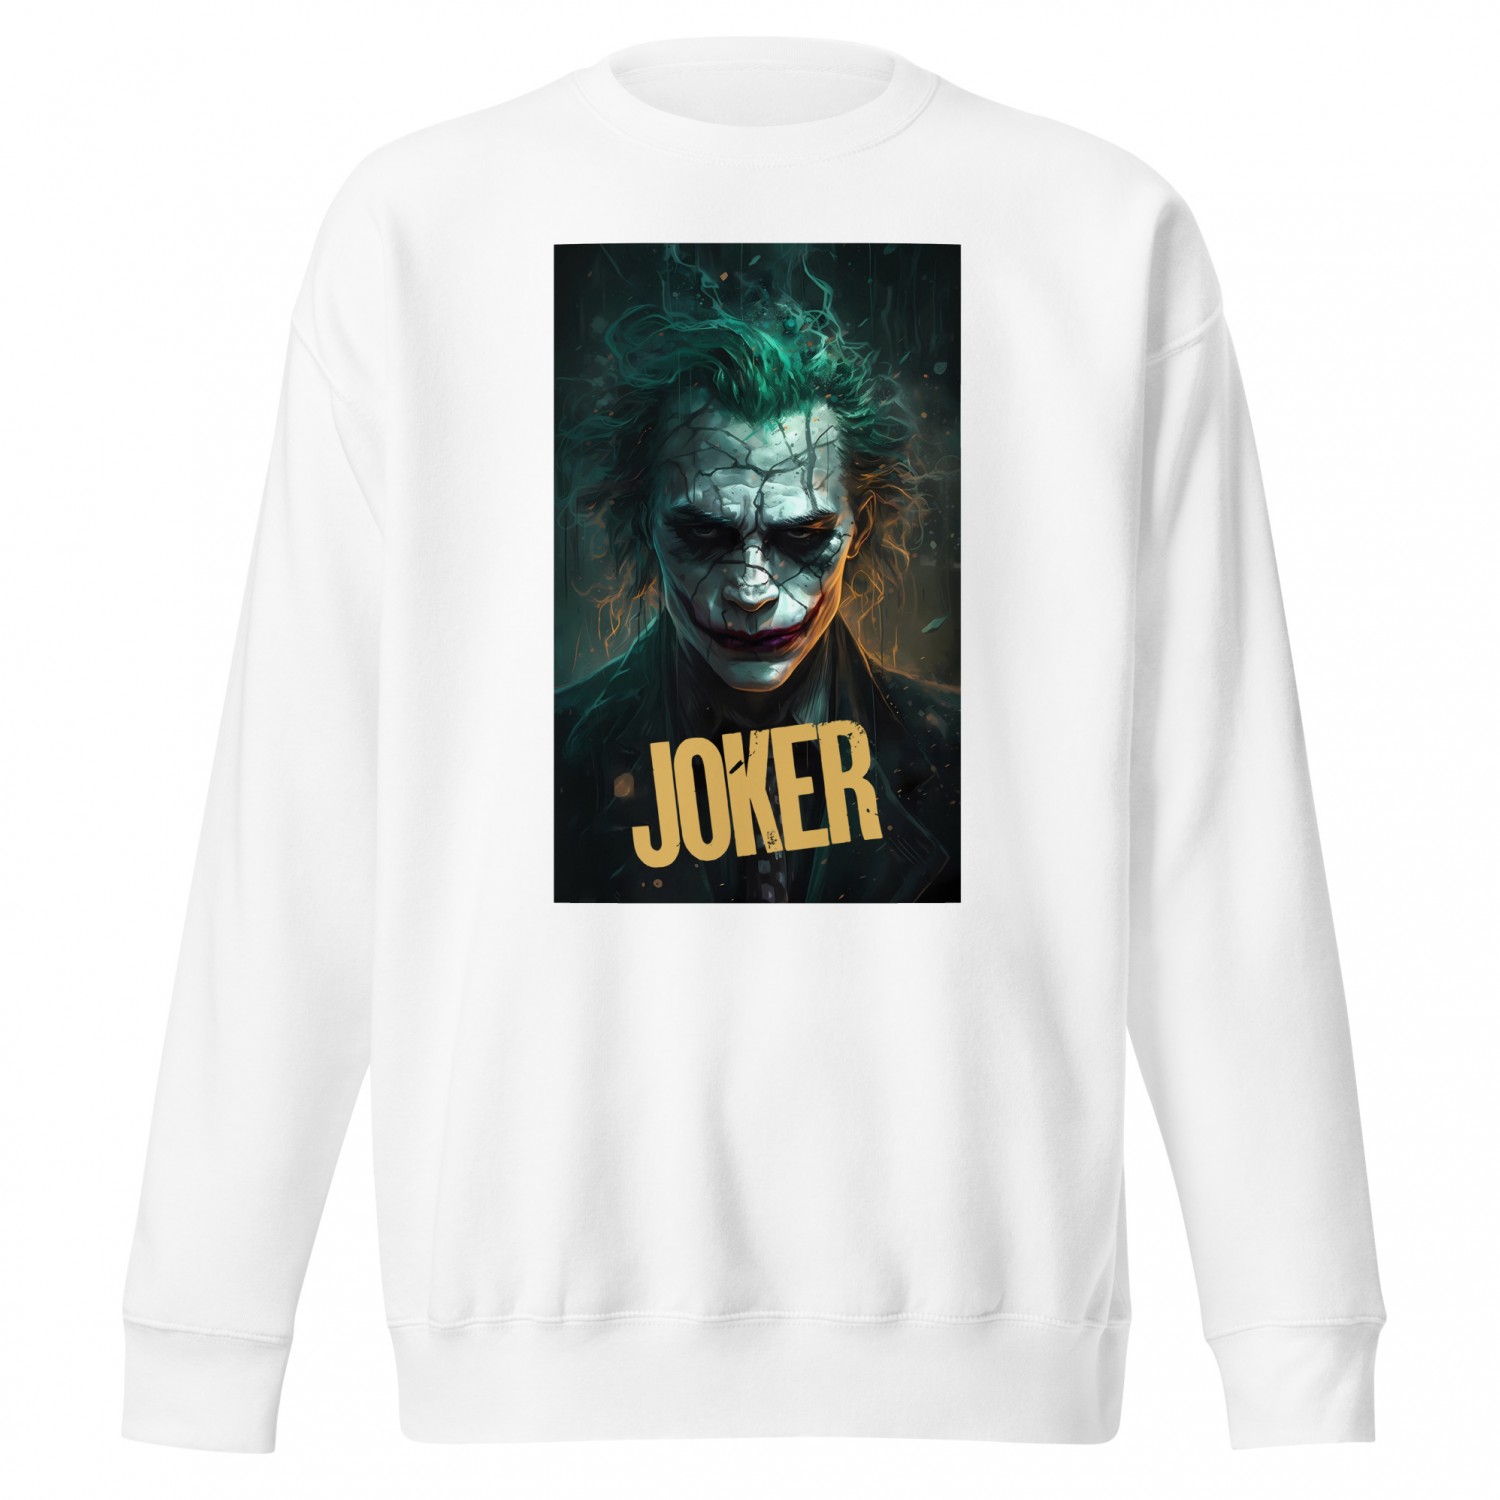 Kup ciepłą bluzę z nadrukiem Jokera